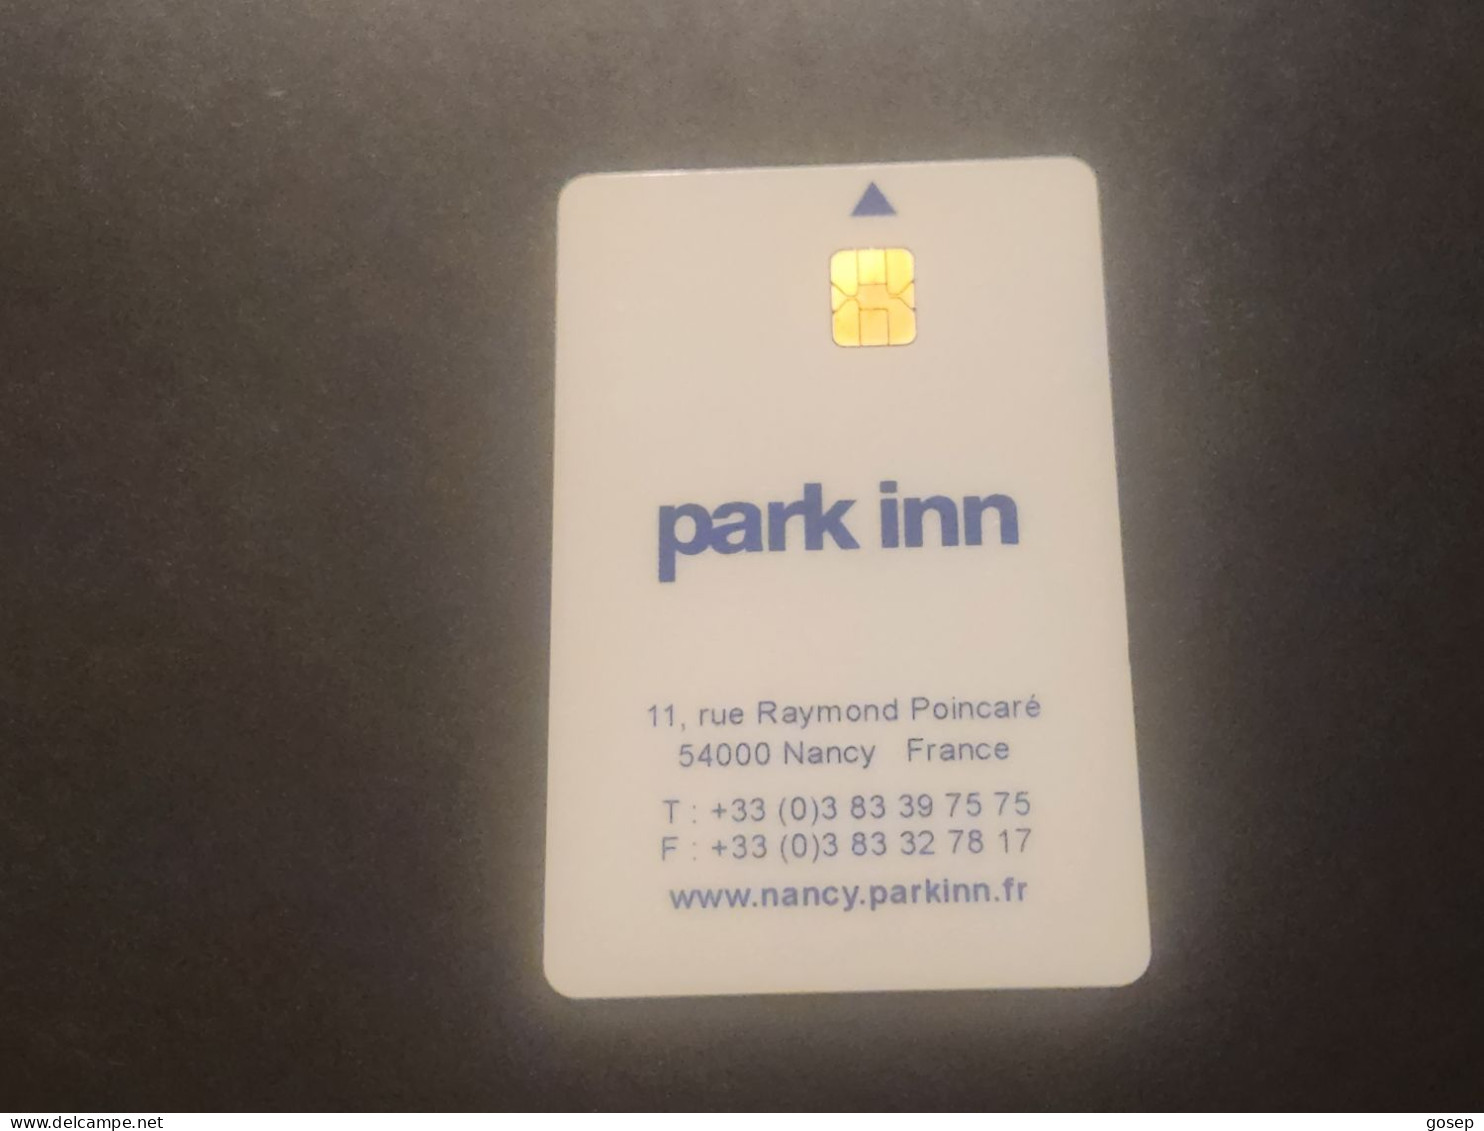 FRANCE-PARK INN-HOTAL KEY-(1050)(CHIP)GOOD CARD - Chiavi Elettroniche Di Alberghi